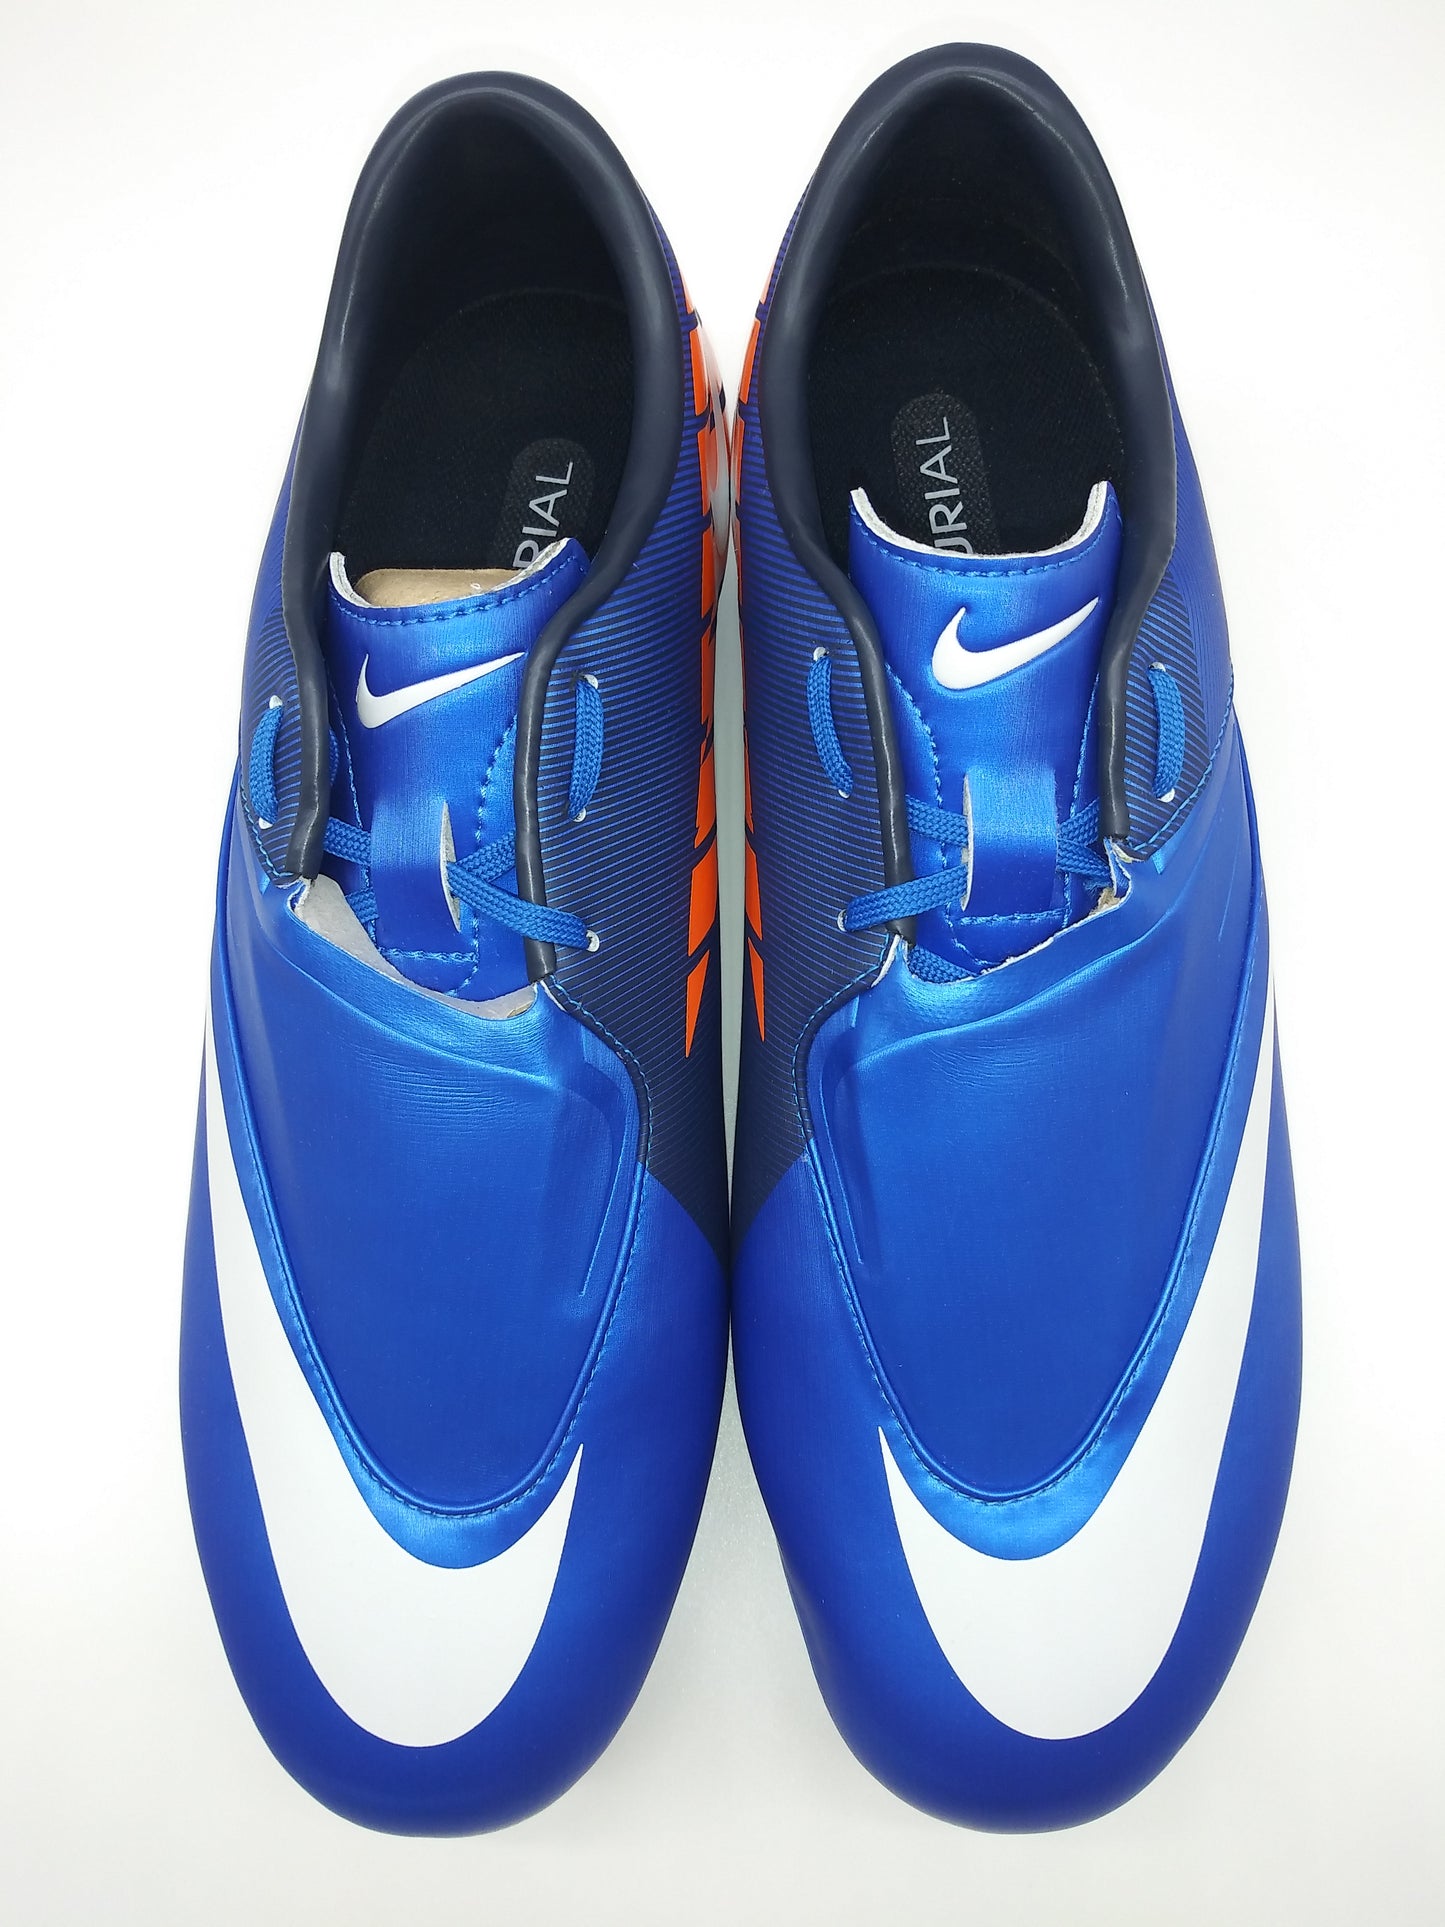 Nike Mercurial Glide ll FG Blue Orange